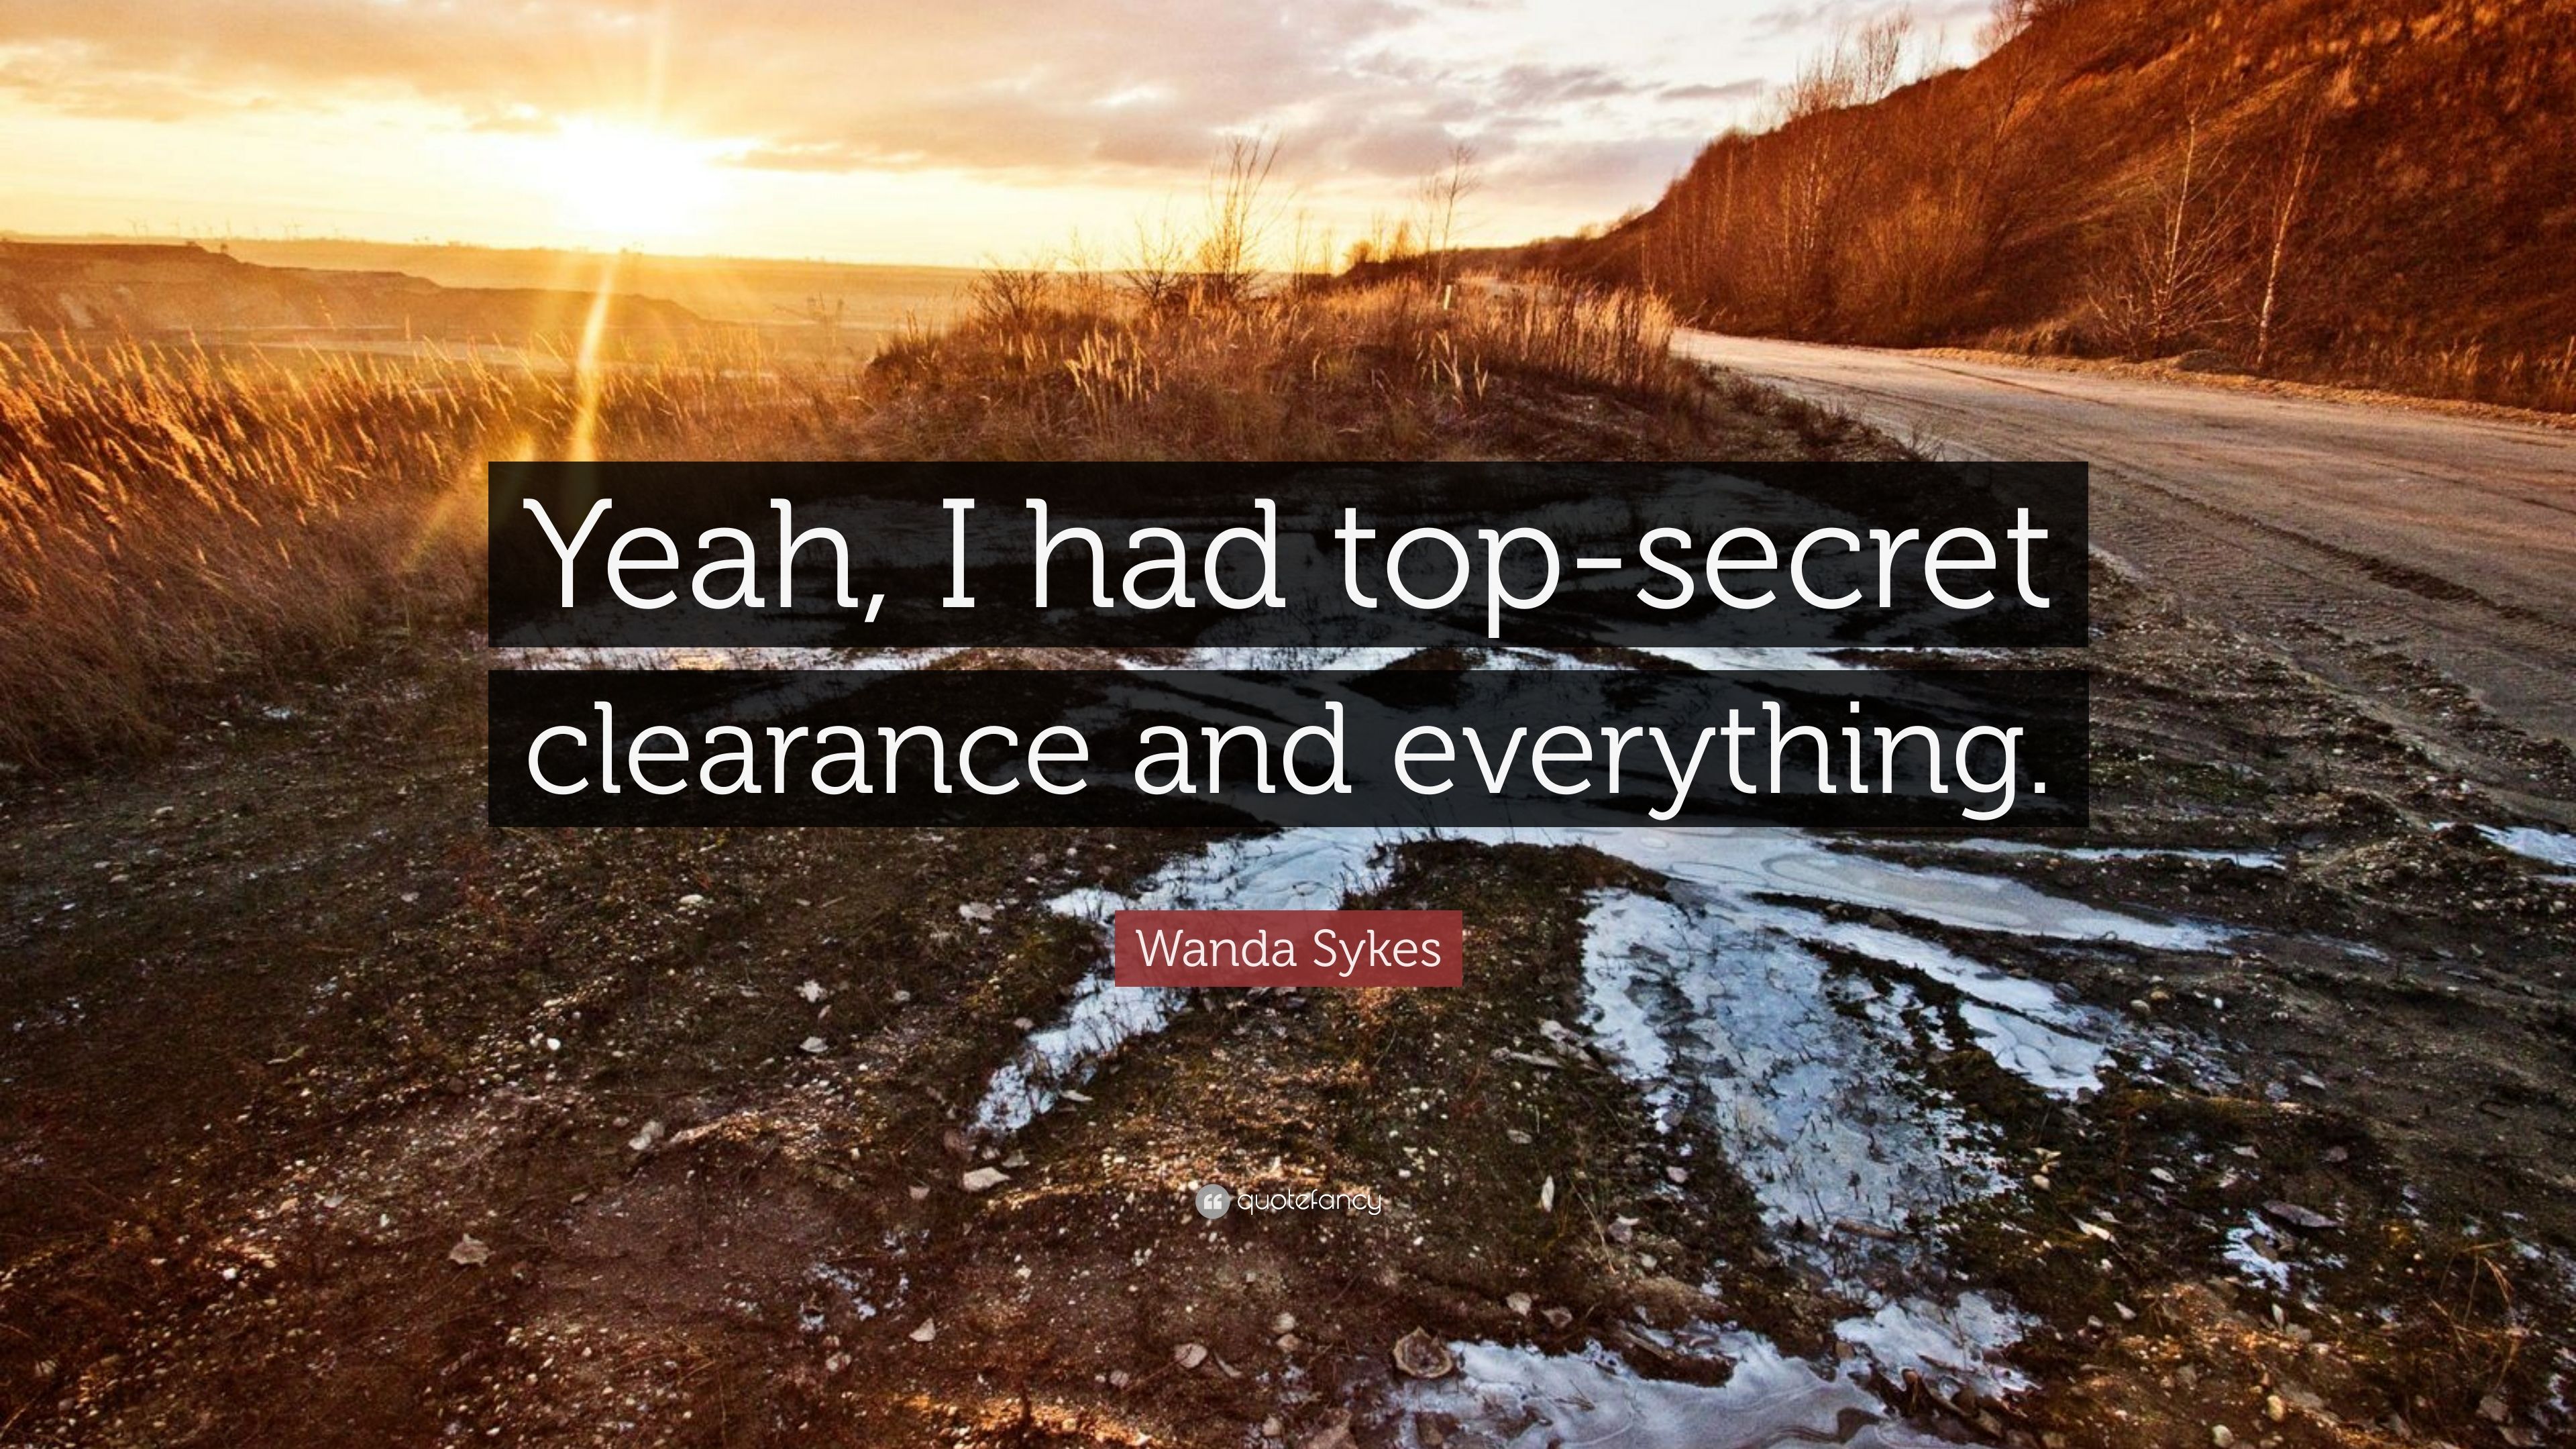 Wanda Sykes Quote: “Yeah, I Had Top Secret Clearance